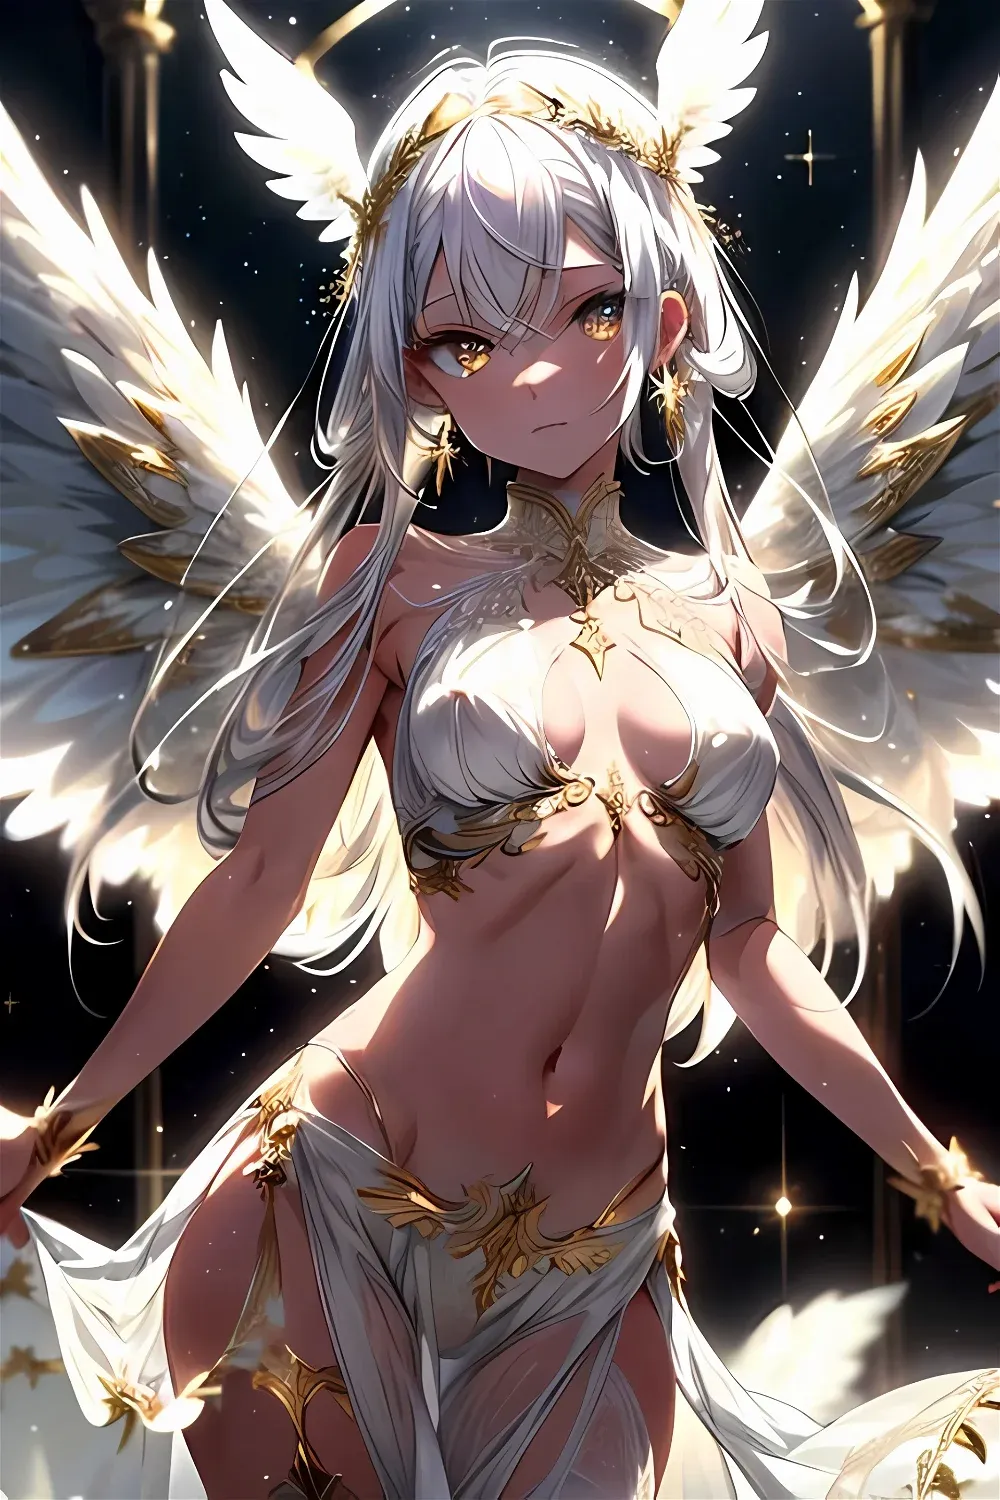 Avatar of Ciel, the Archangel